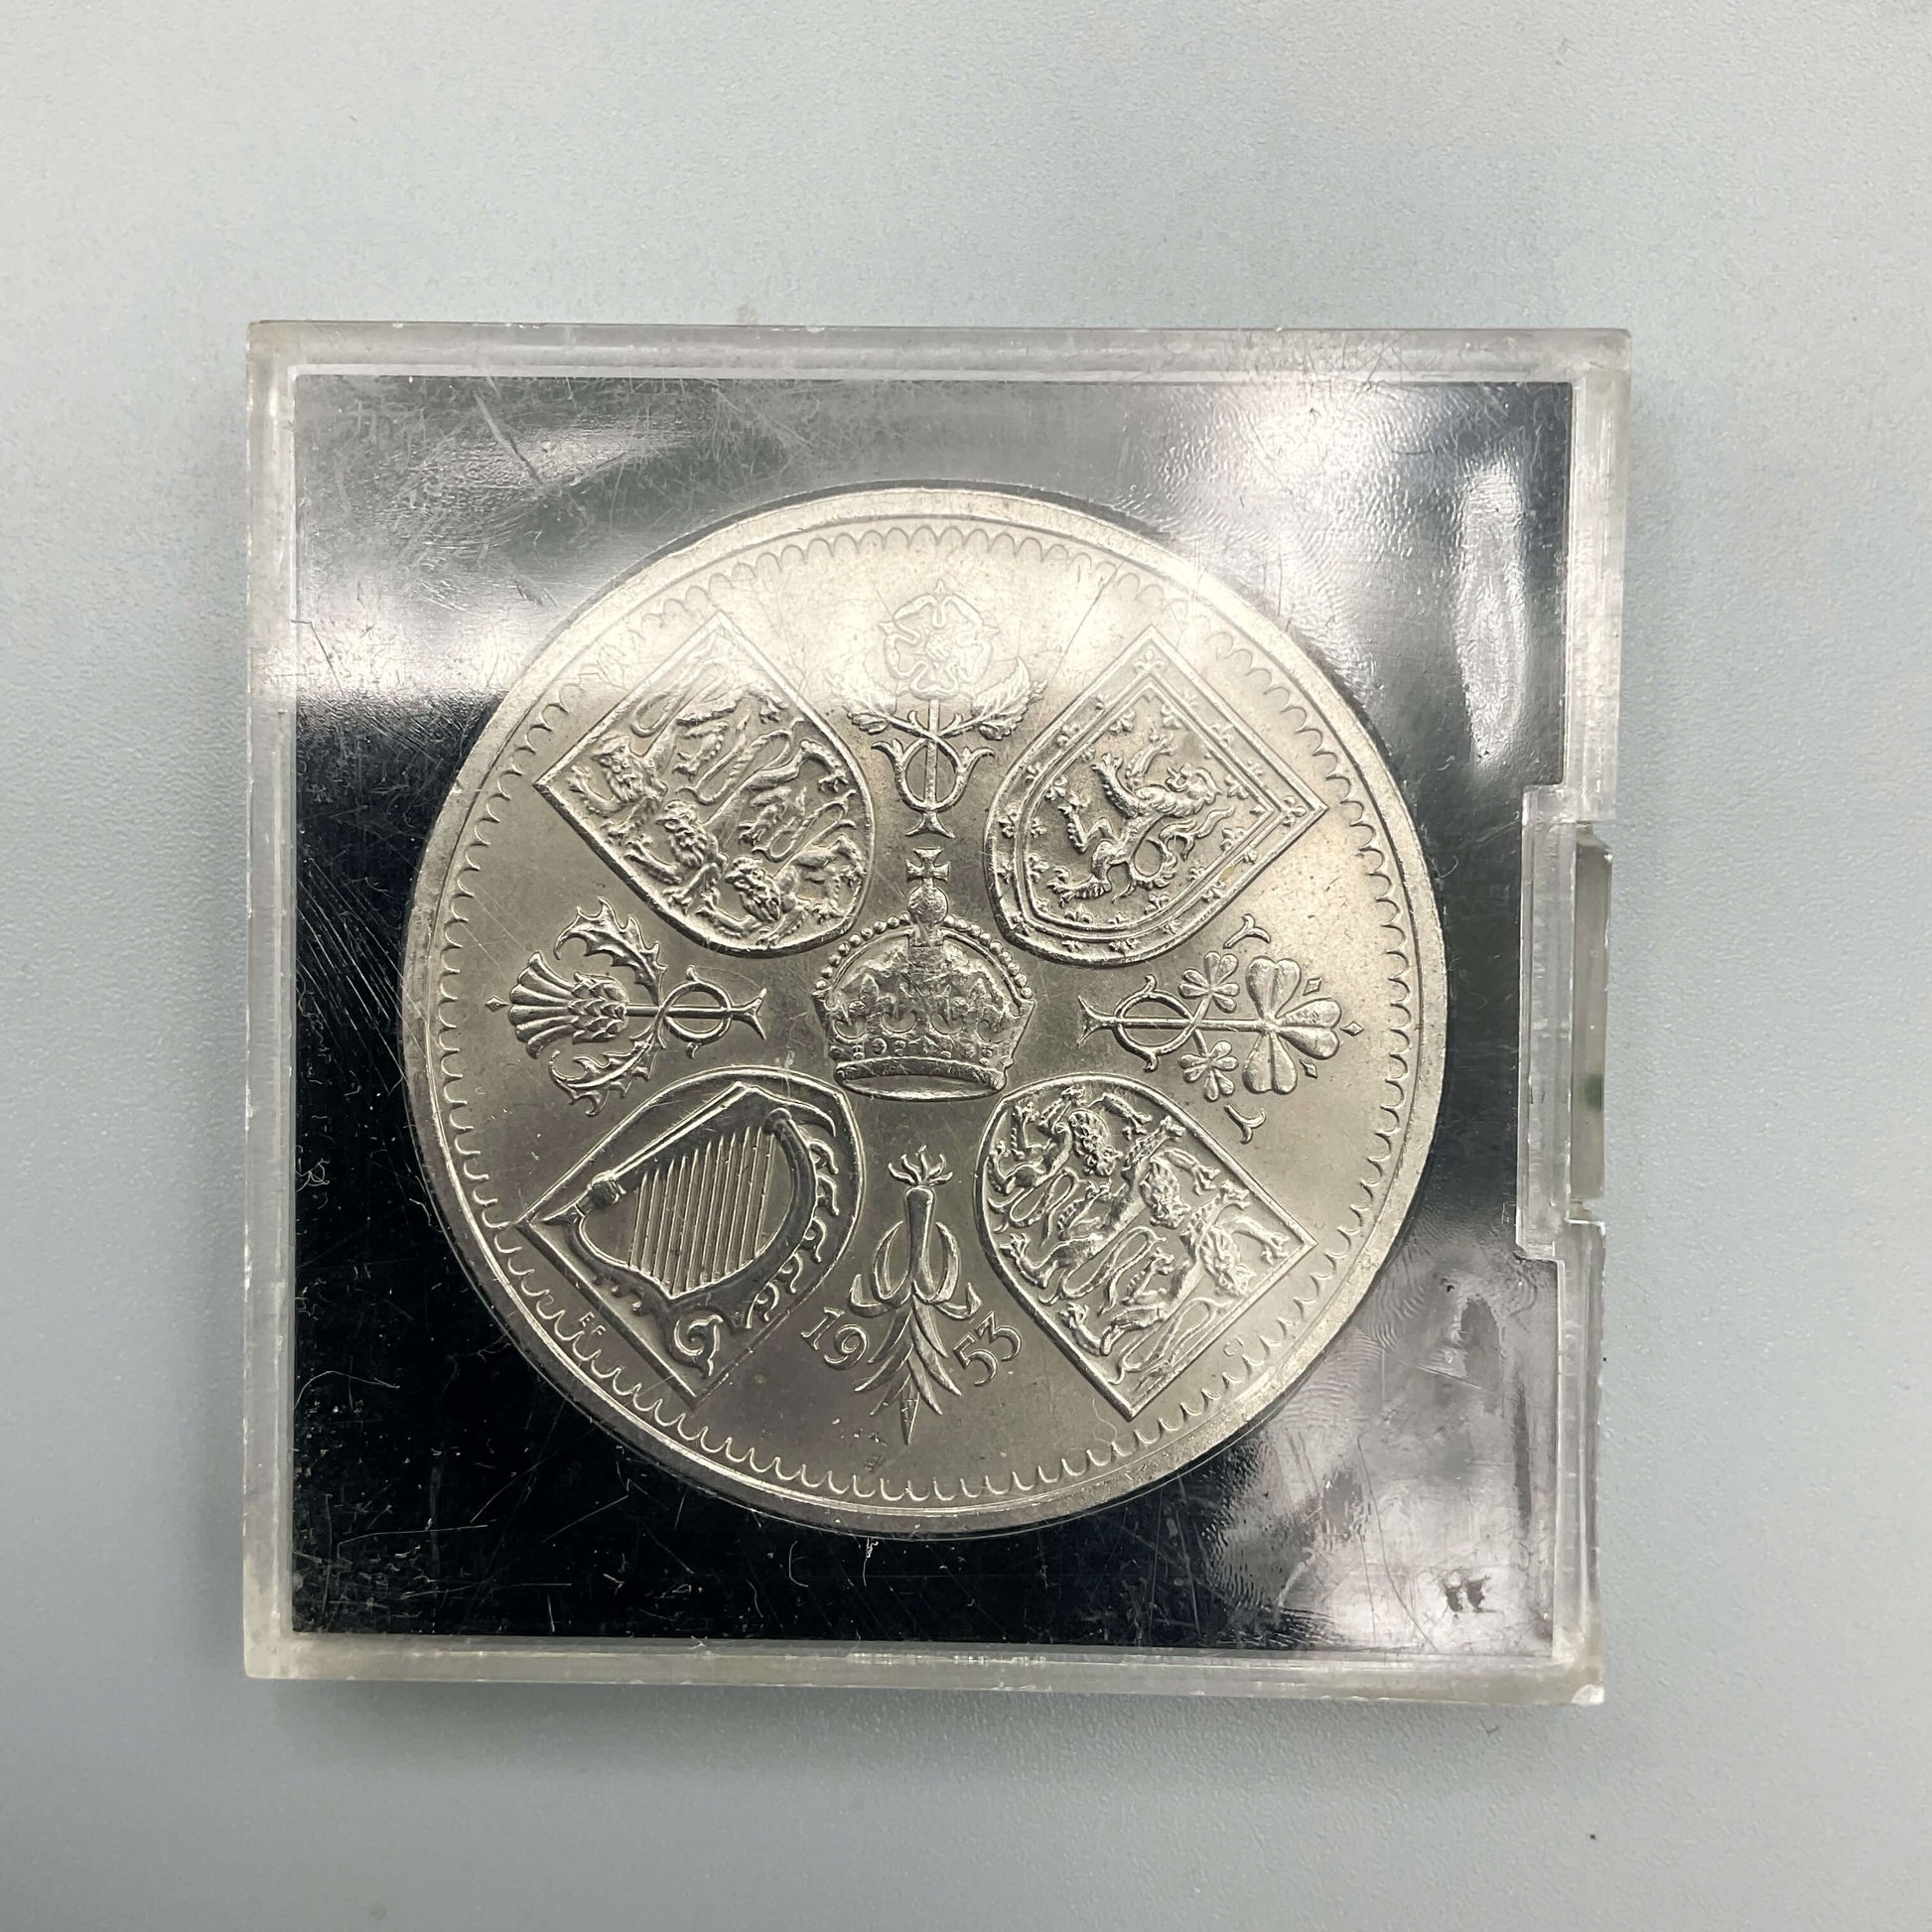 Queen Elizabeth II Coronation Five Shilling Coin in a Perspex Case